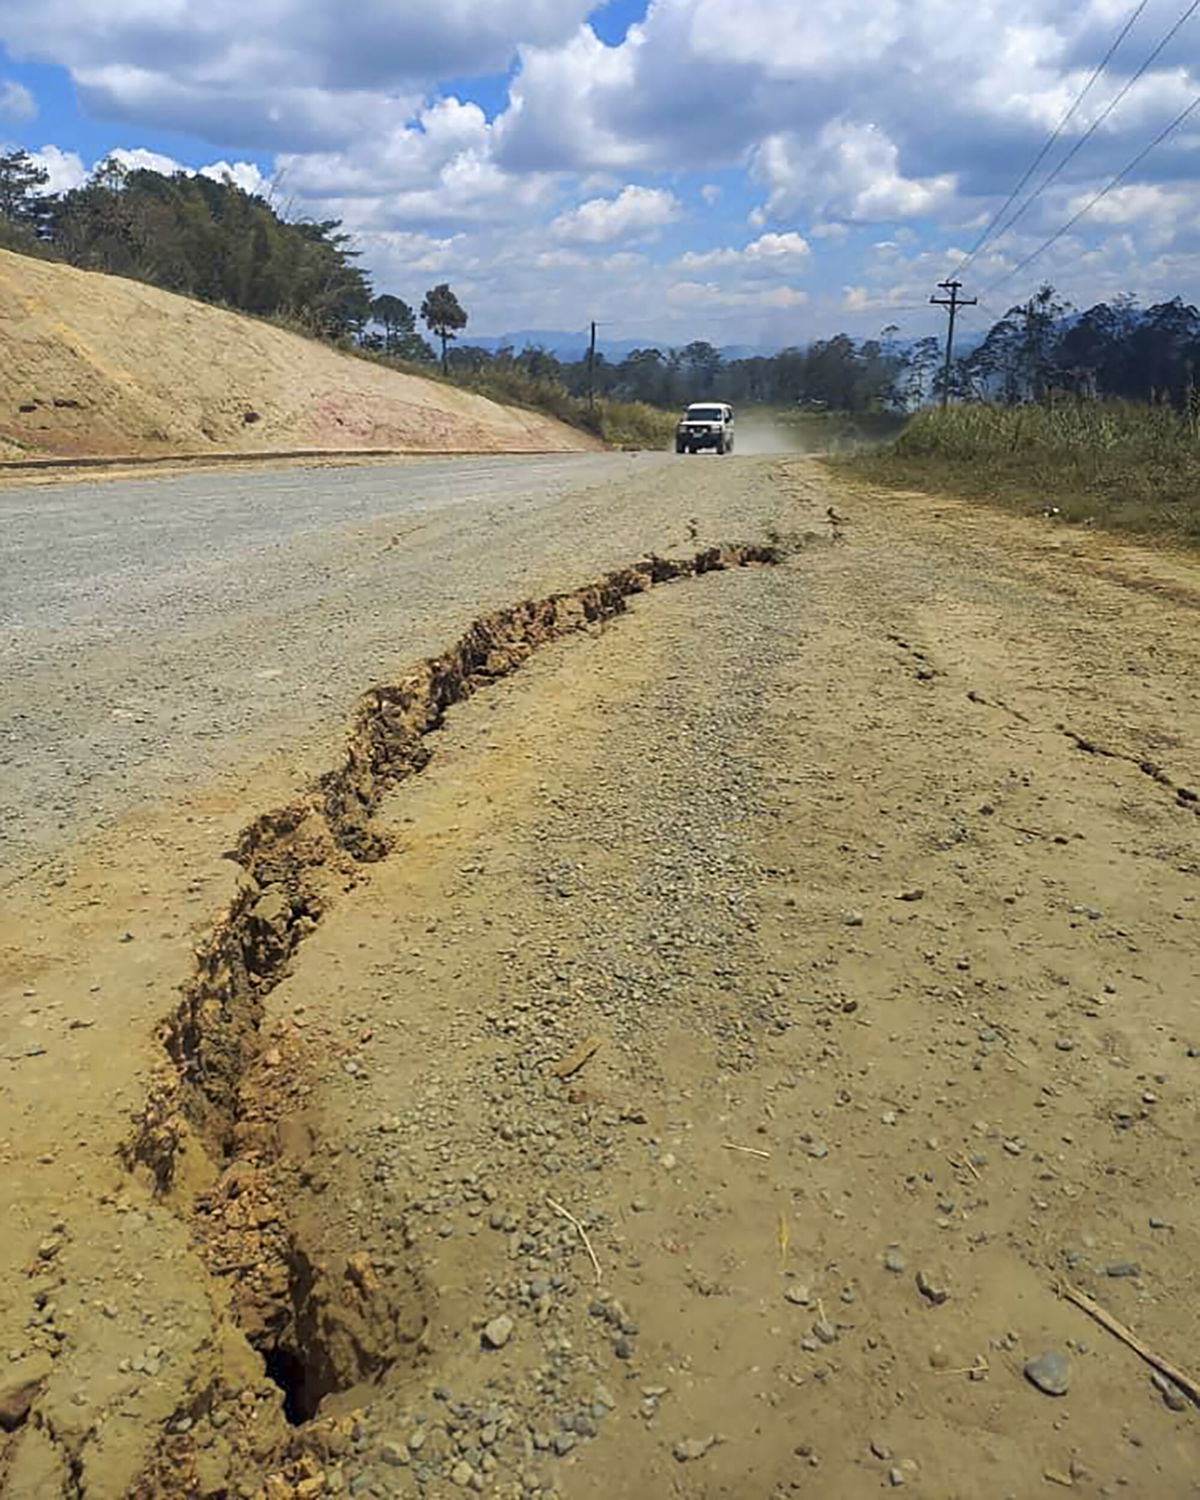 <i>Renagi Ravu/AP</i><br/>A large crack in a highway near the town of Kainantu